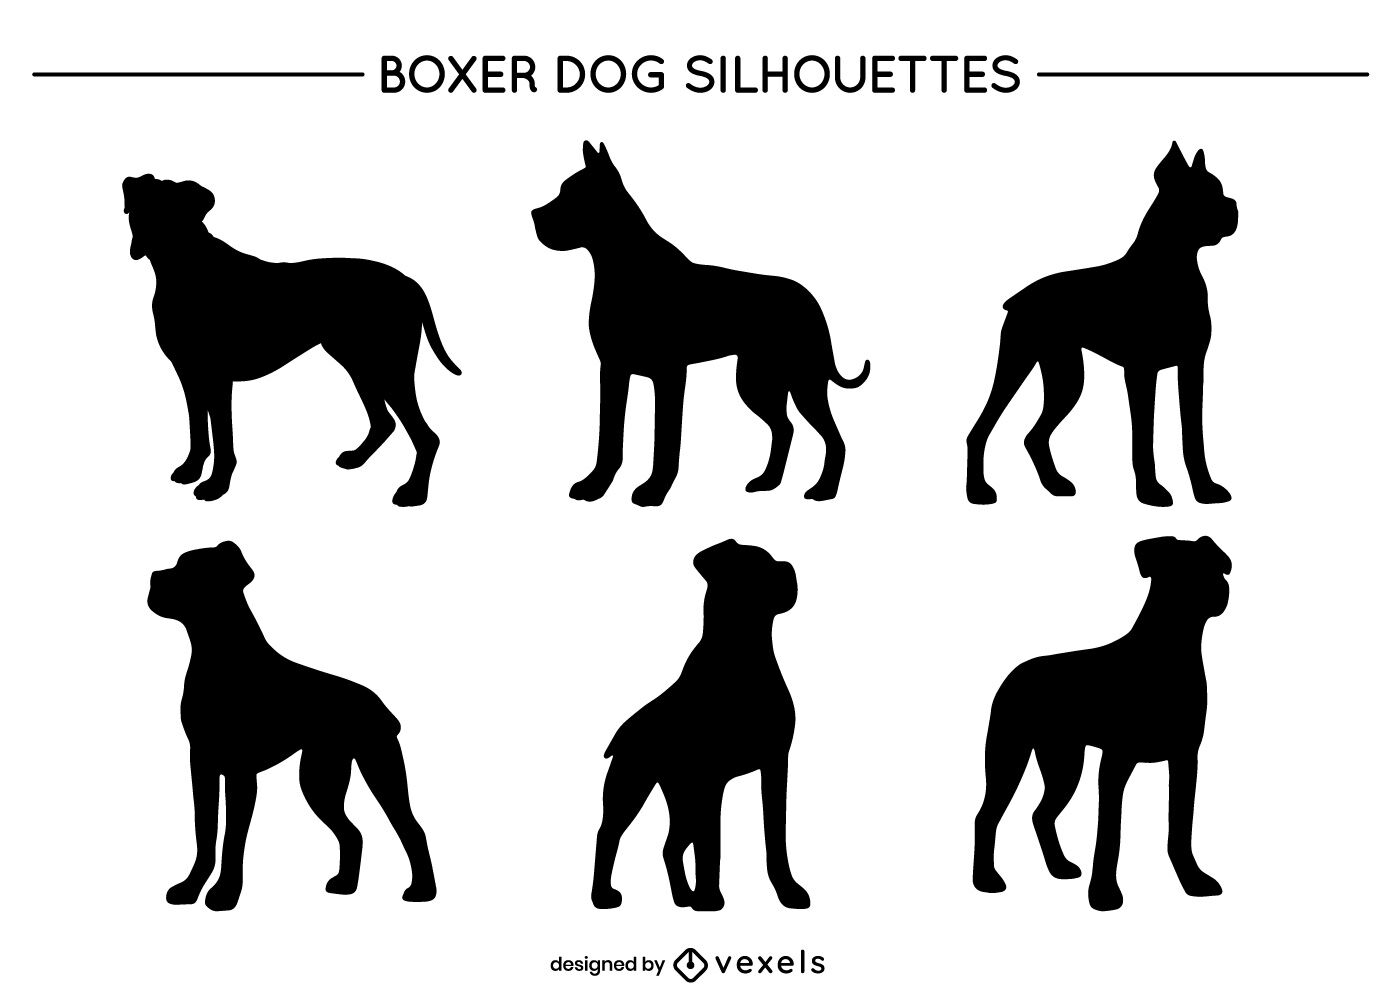 Boxer dog silhouettes illustration set 